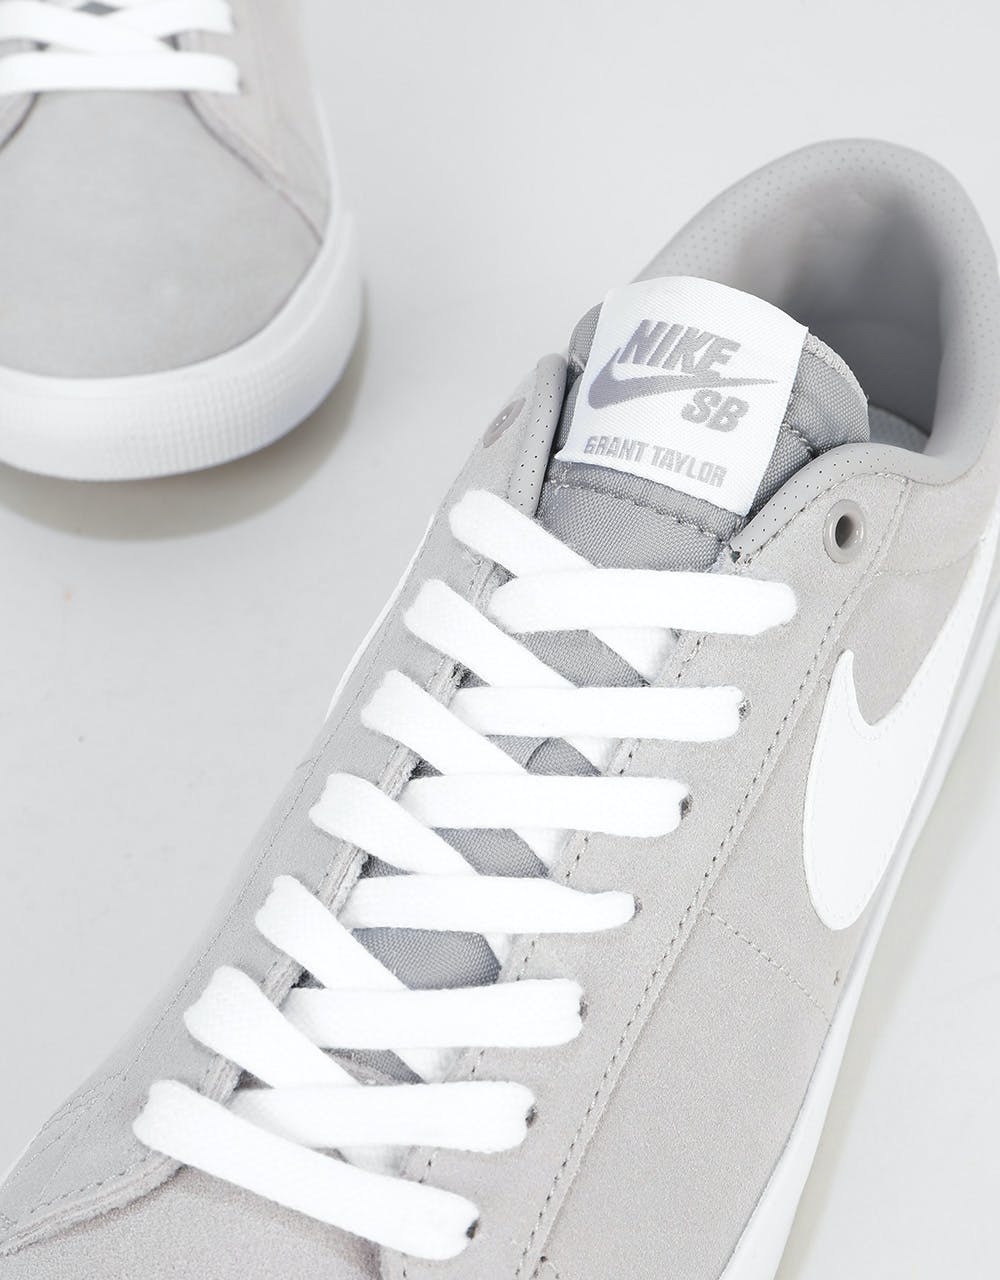 Nike SB Blazer Low GT Skate Shoes - Atmosphere Grey/White